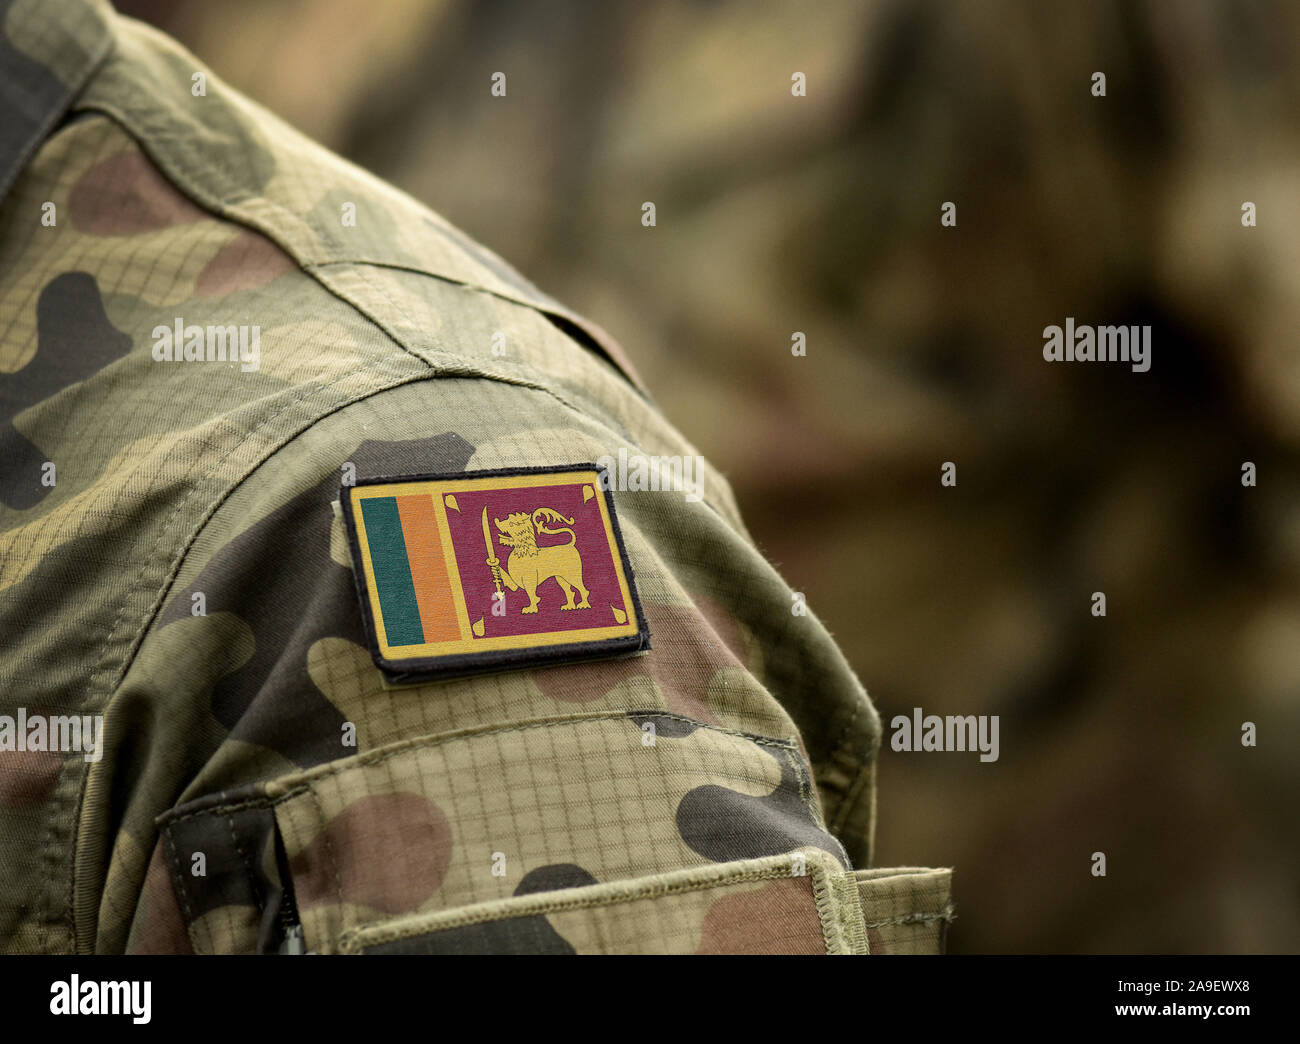 Sri Lanka Army High Resolution Stock Photography And Images Alamy